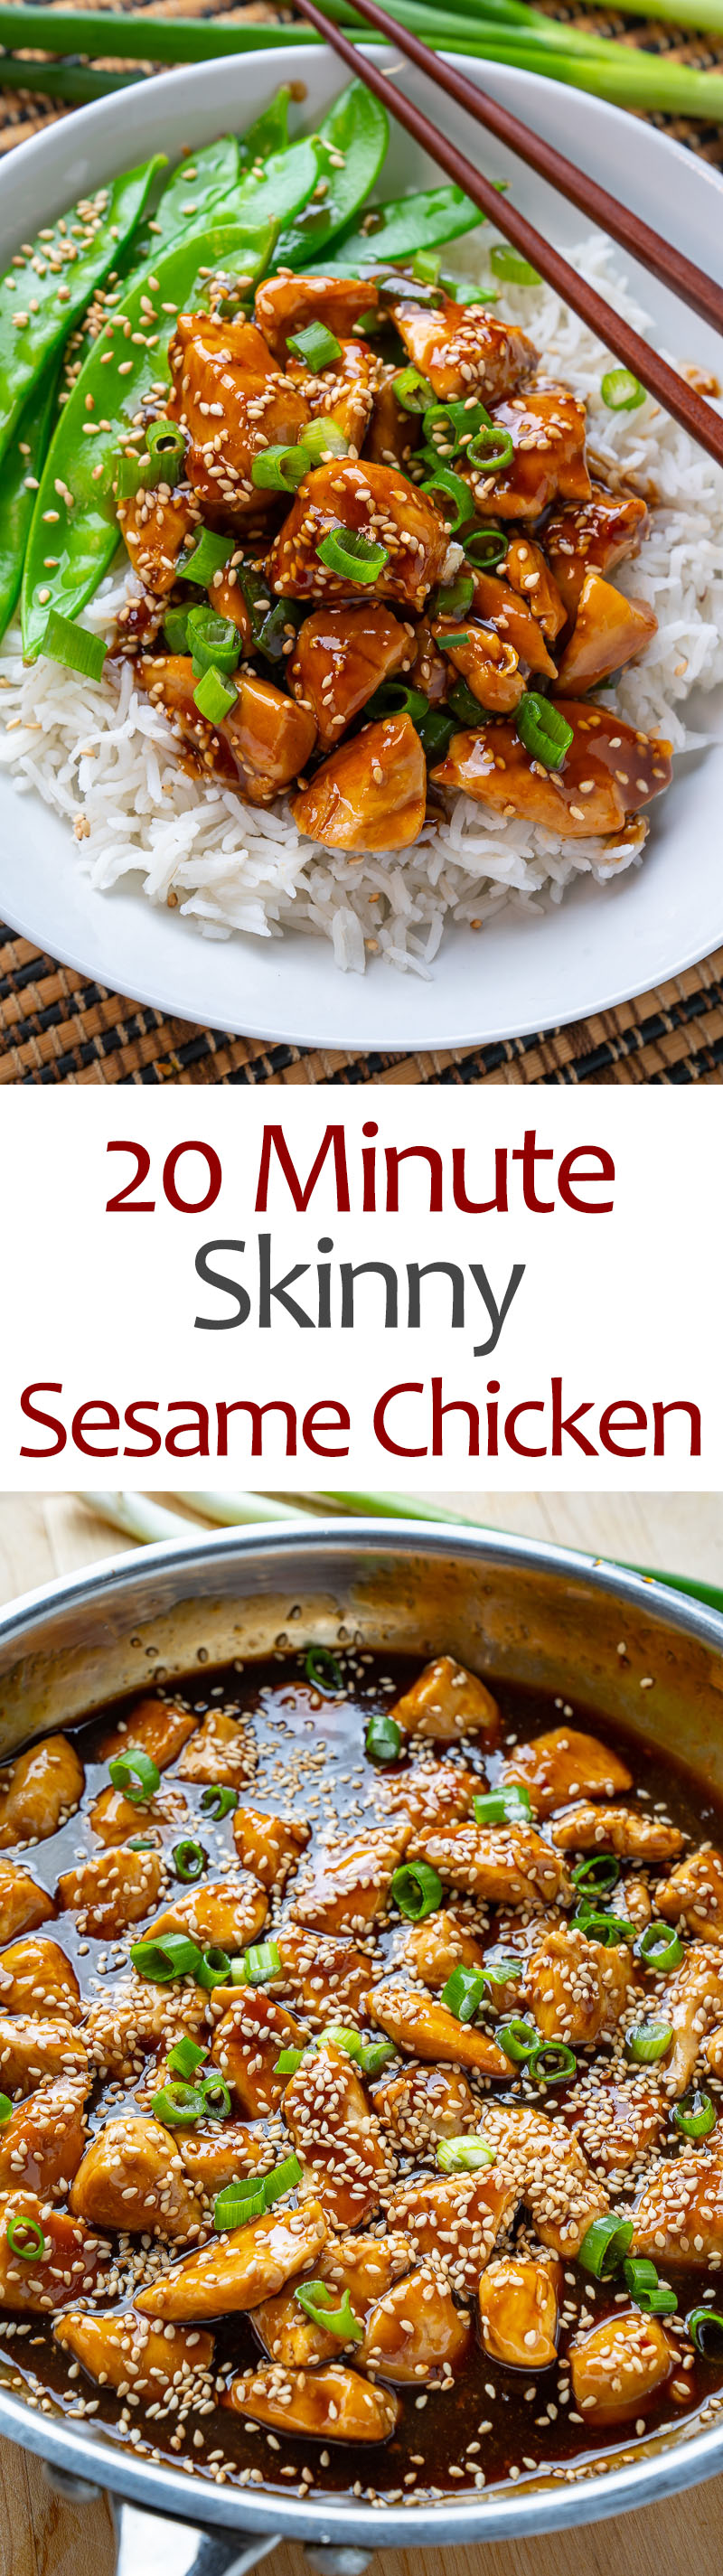 20 Minute Skinny Sesame Chicken